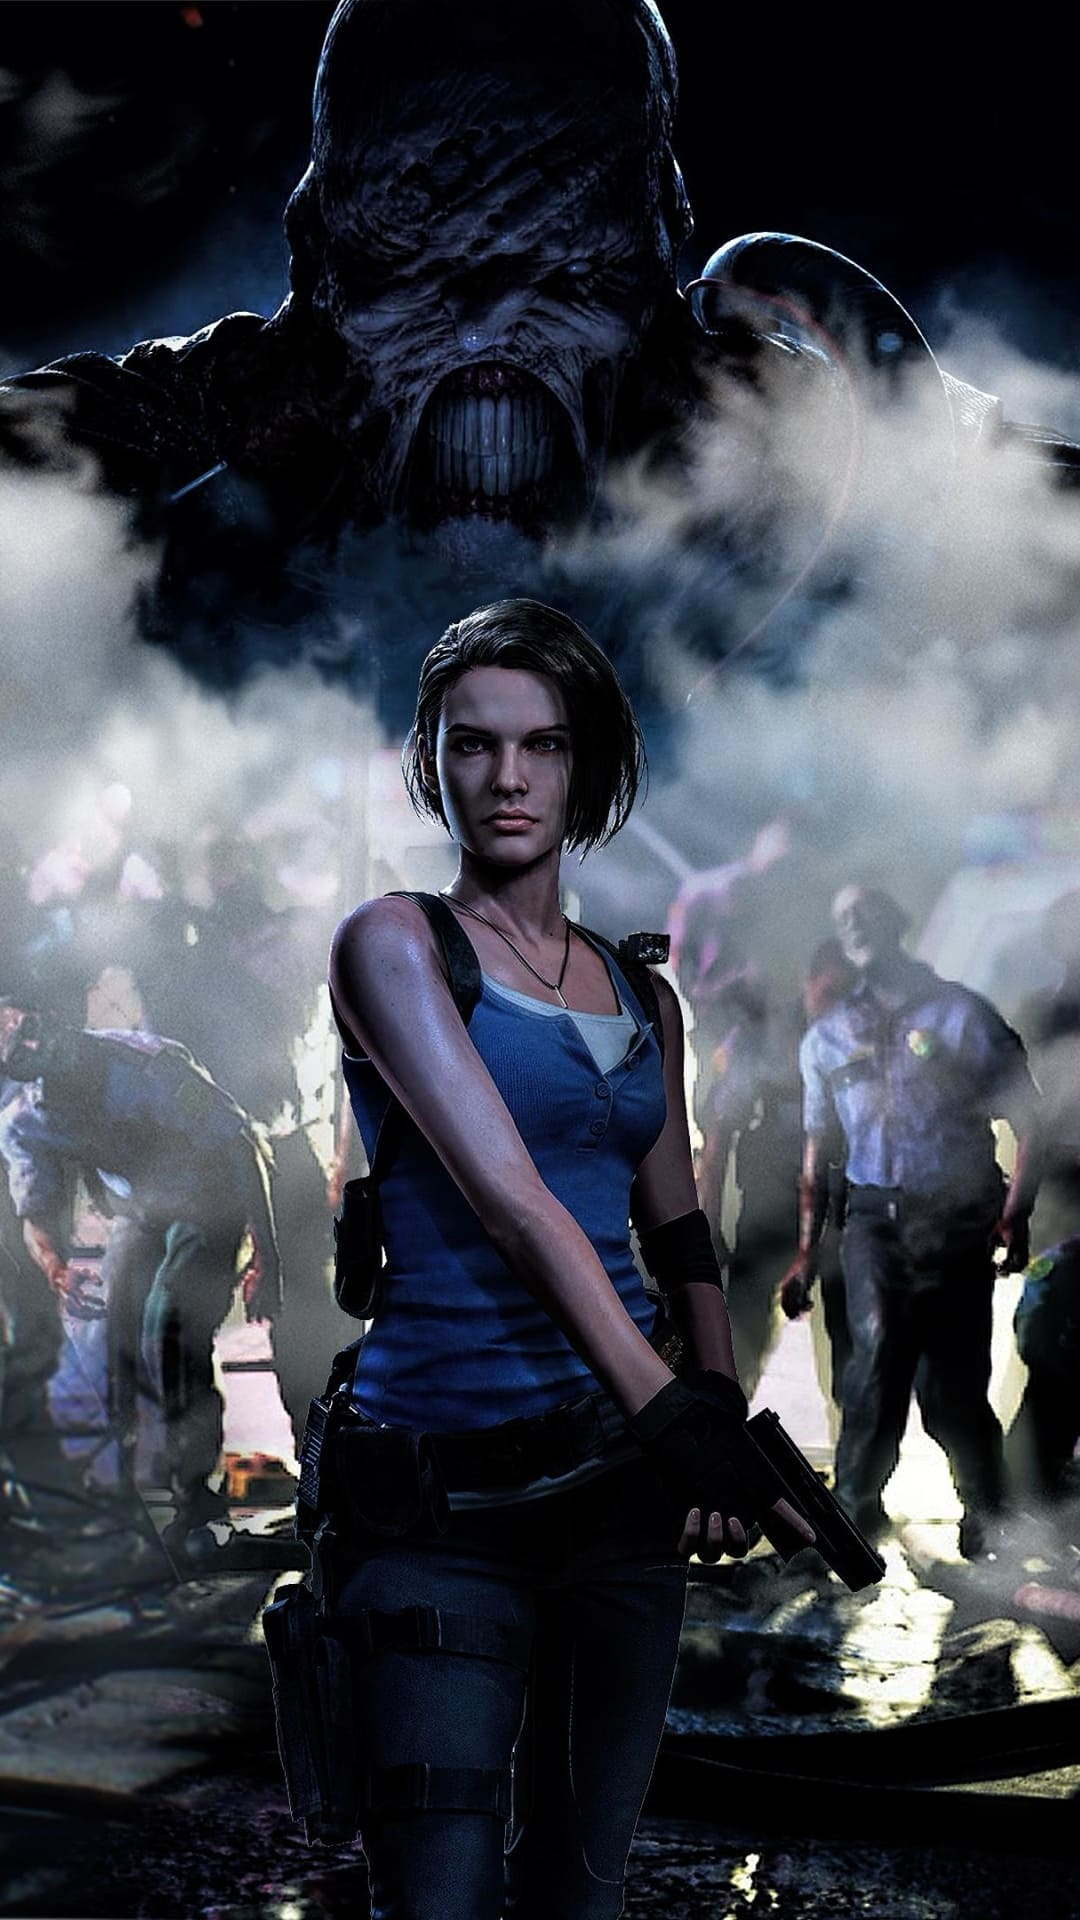 1080x1920 Resident Evil 3 wallpapers Top 35 Best Resident Evil 3 Backgrounds